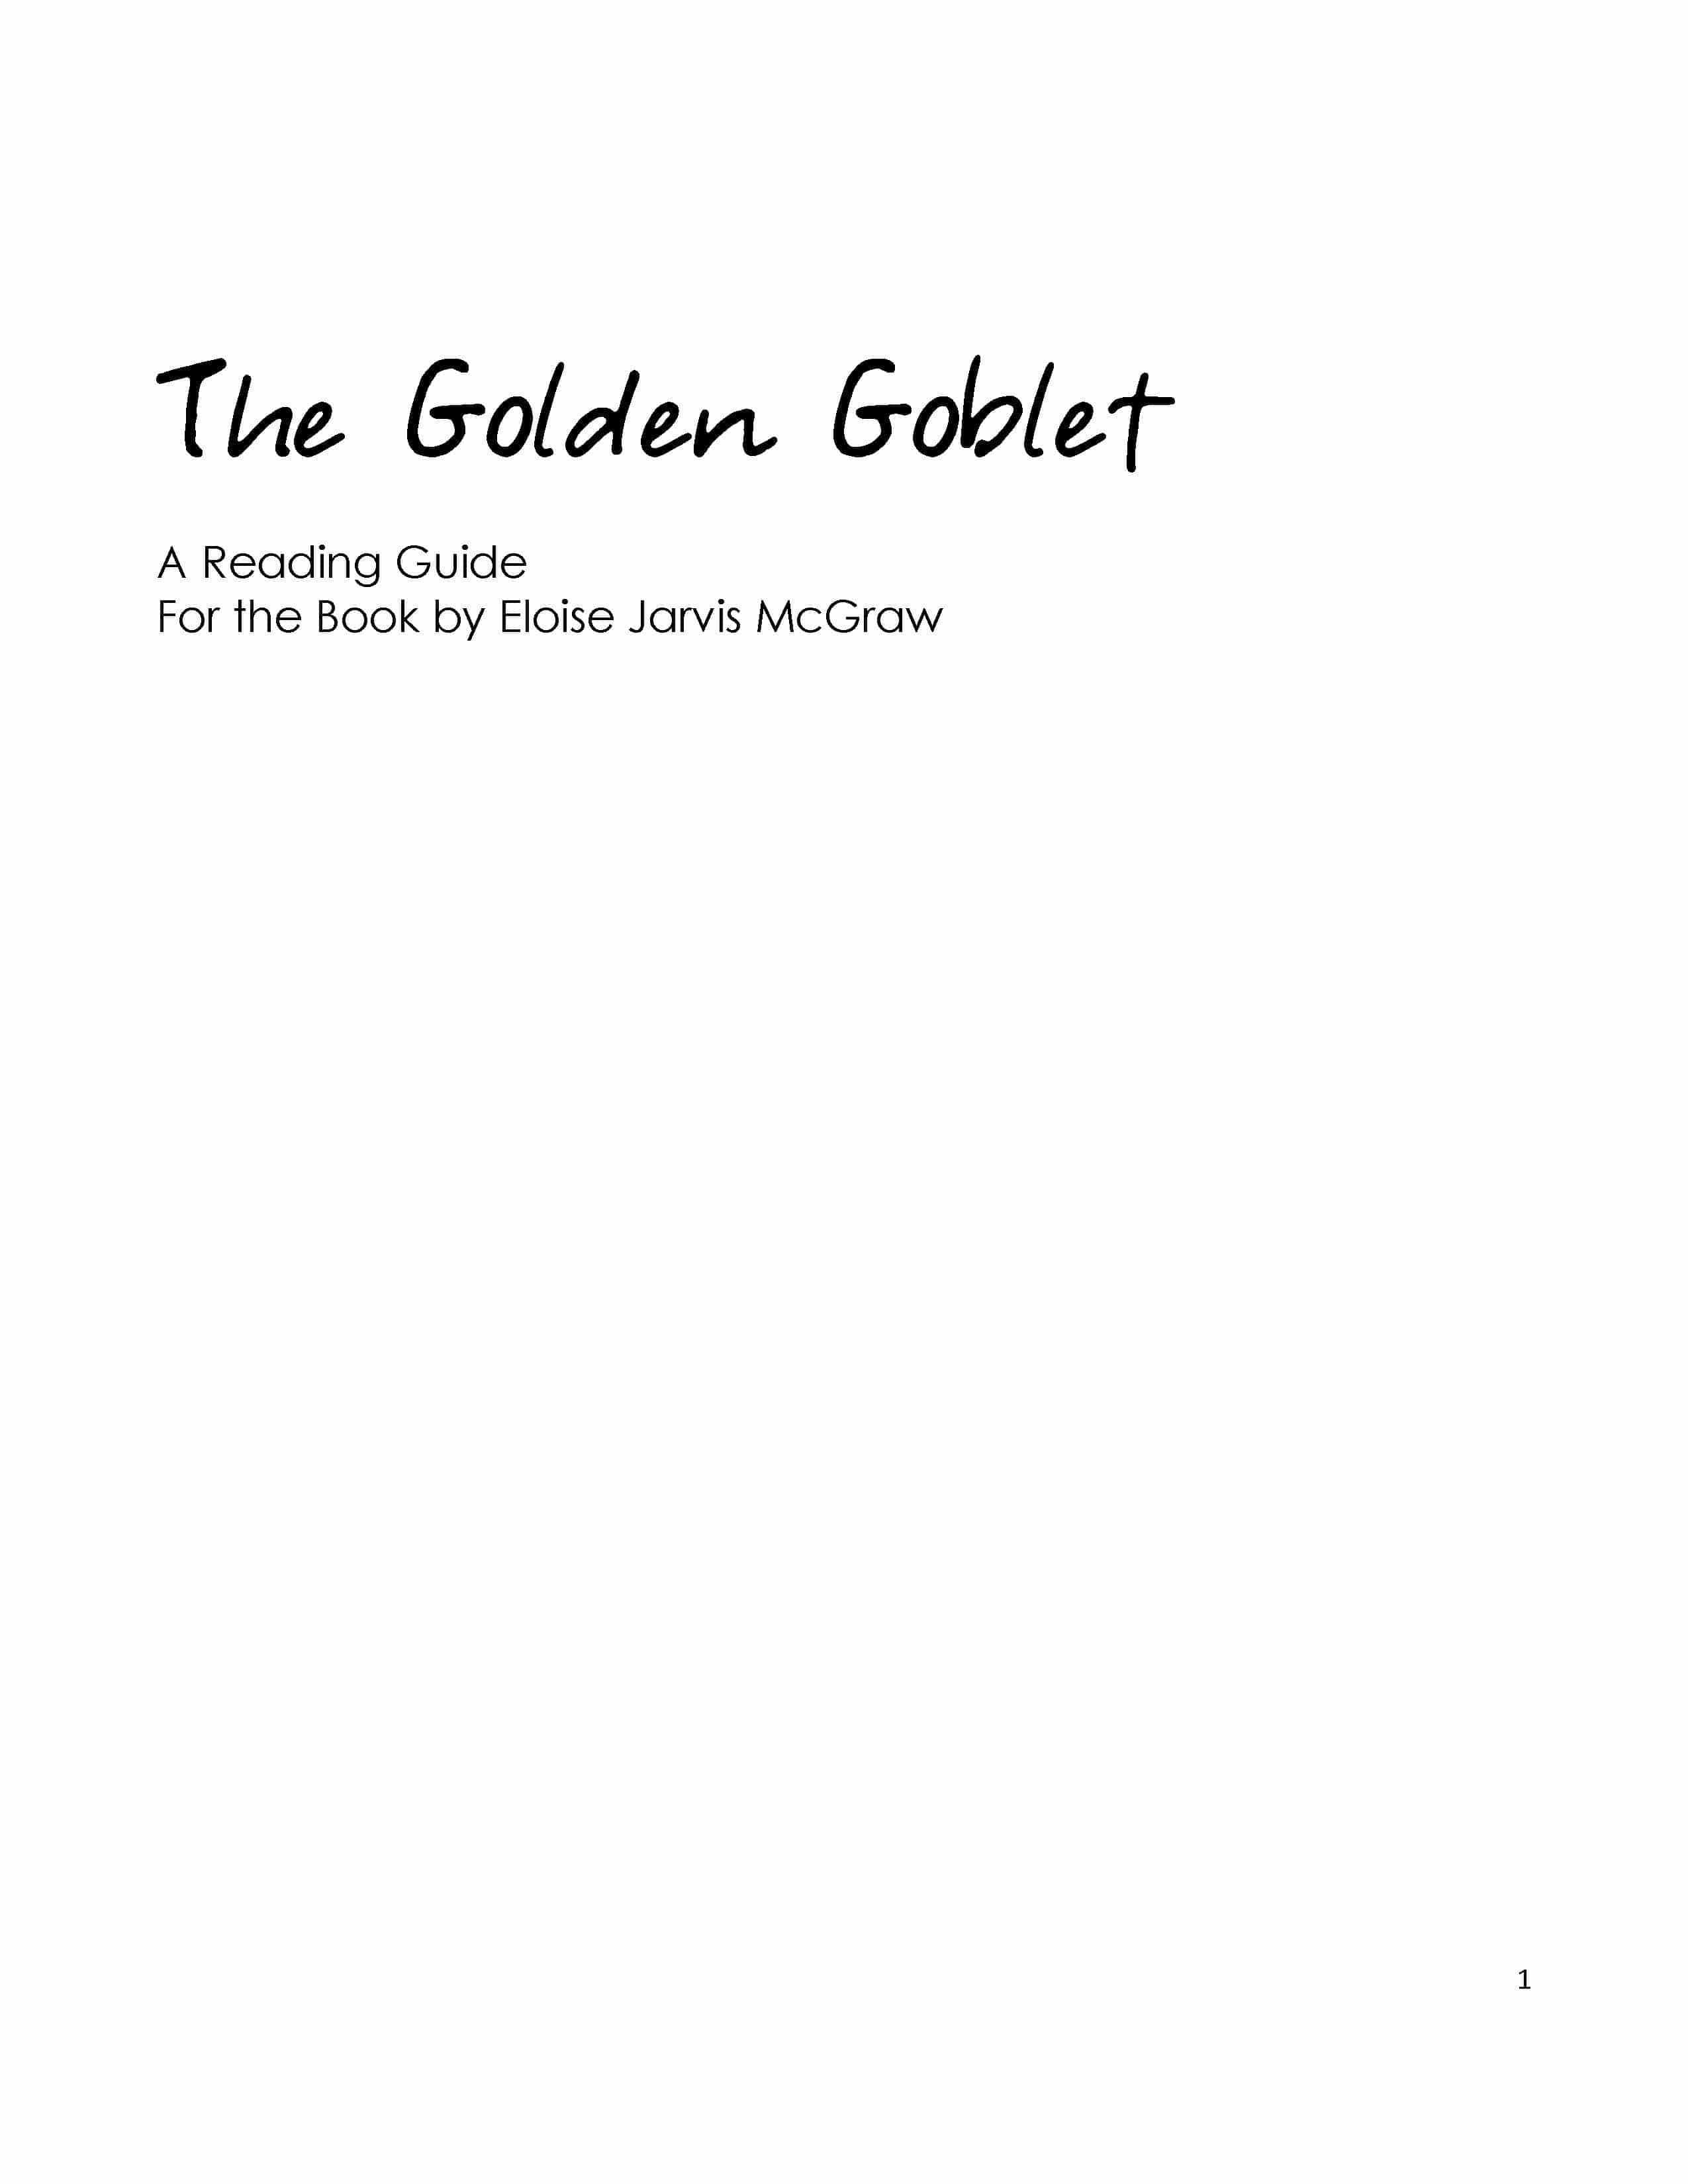 The Golden Goblet - Reading Guide (Download)